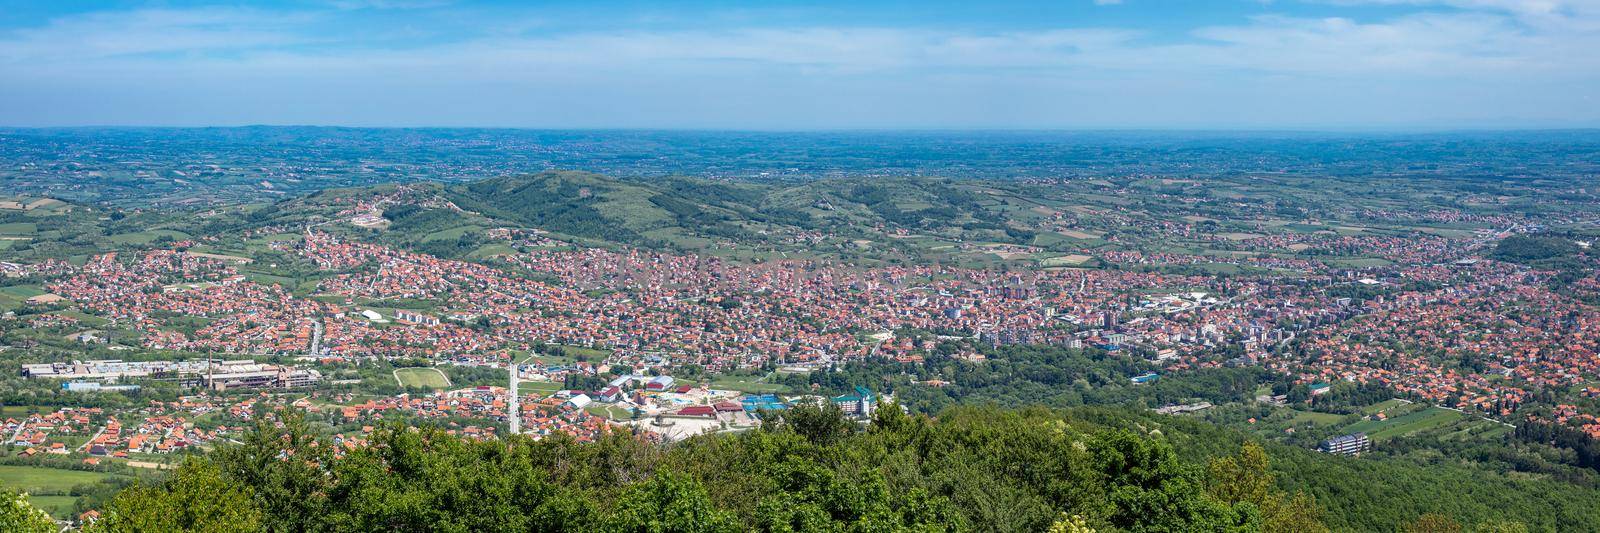 Panorama View of Arandjelovac City in Serbia by adamr